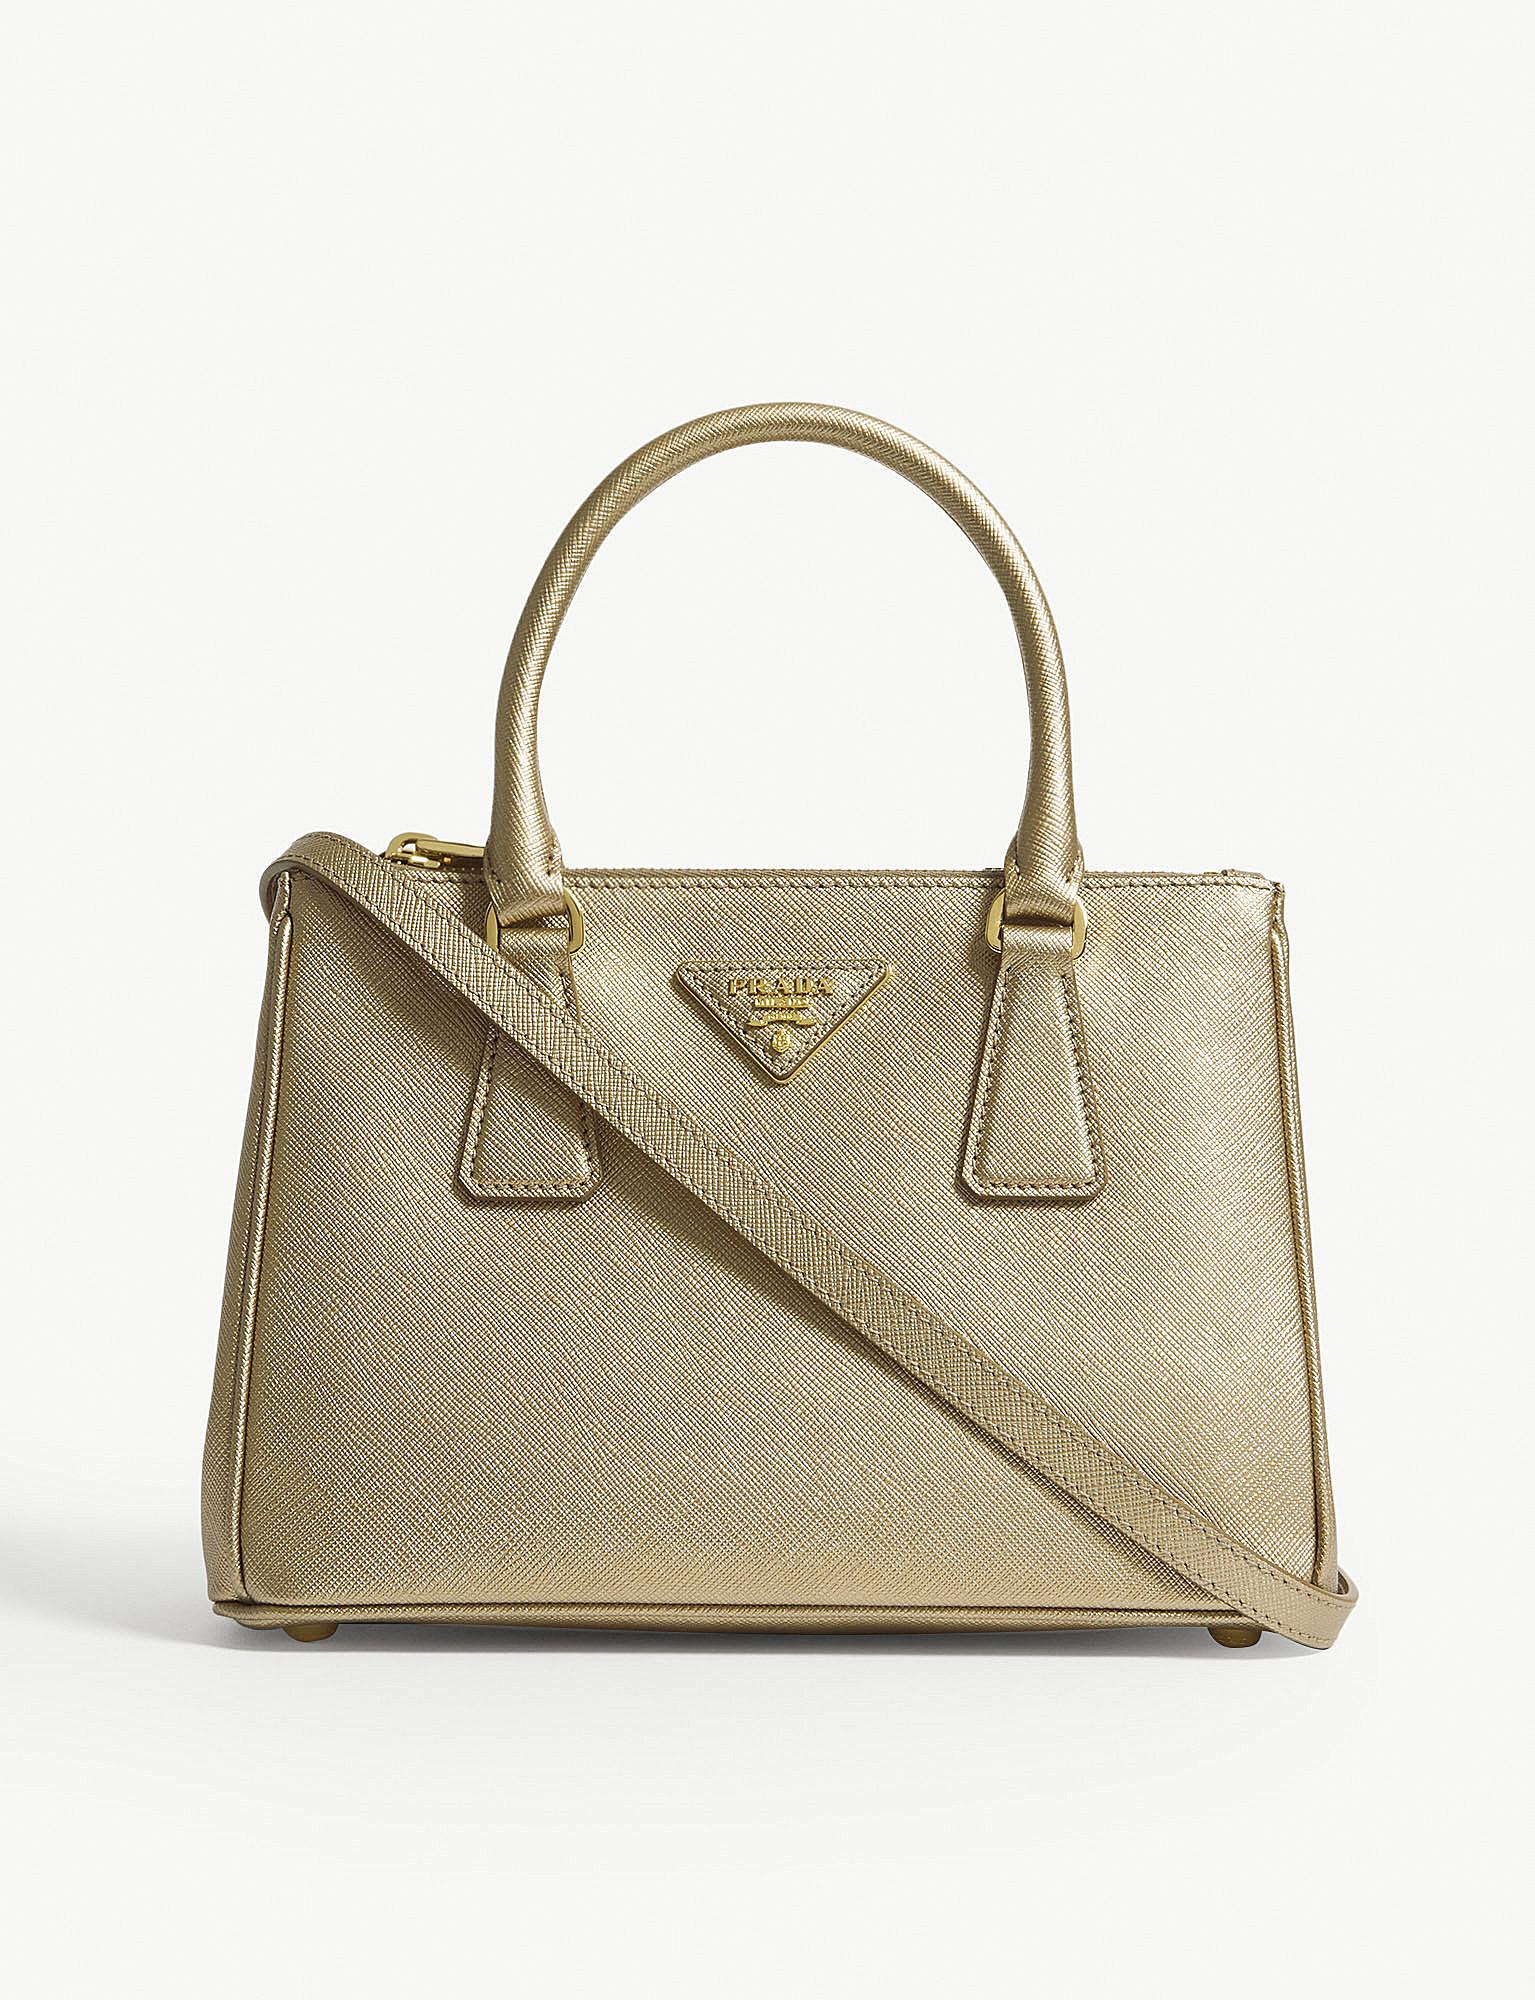 Prada Gold Galleria Leather Tote Bag in Metallic | Lyst